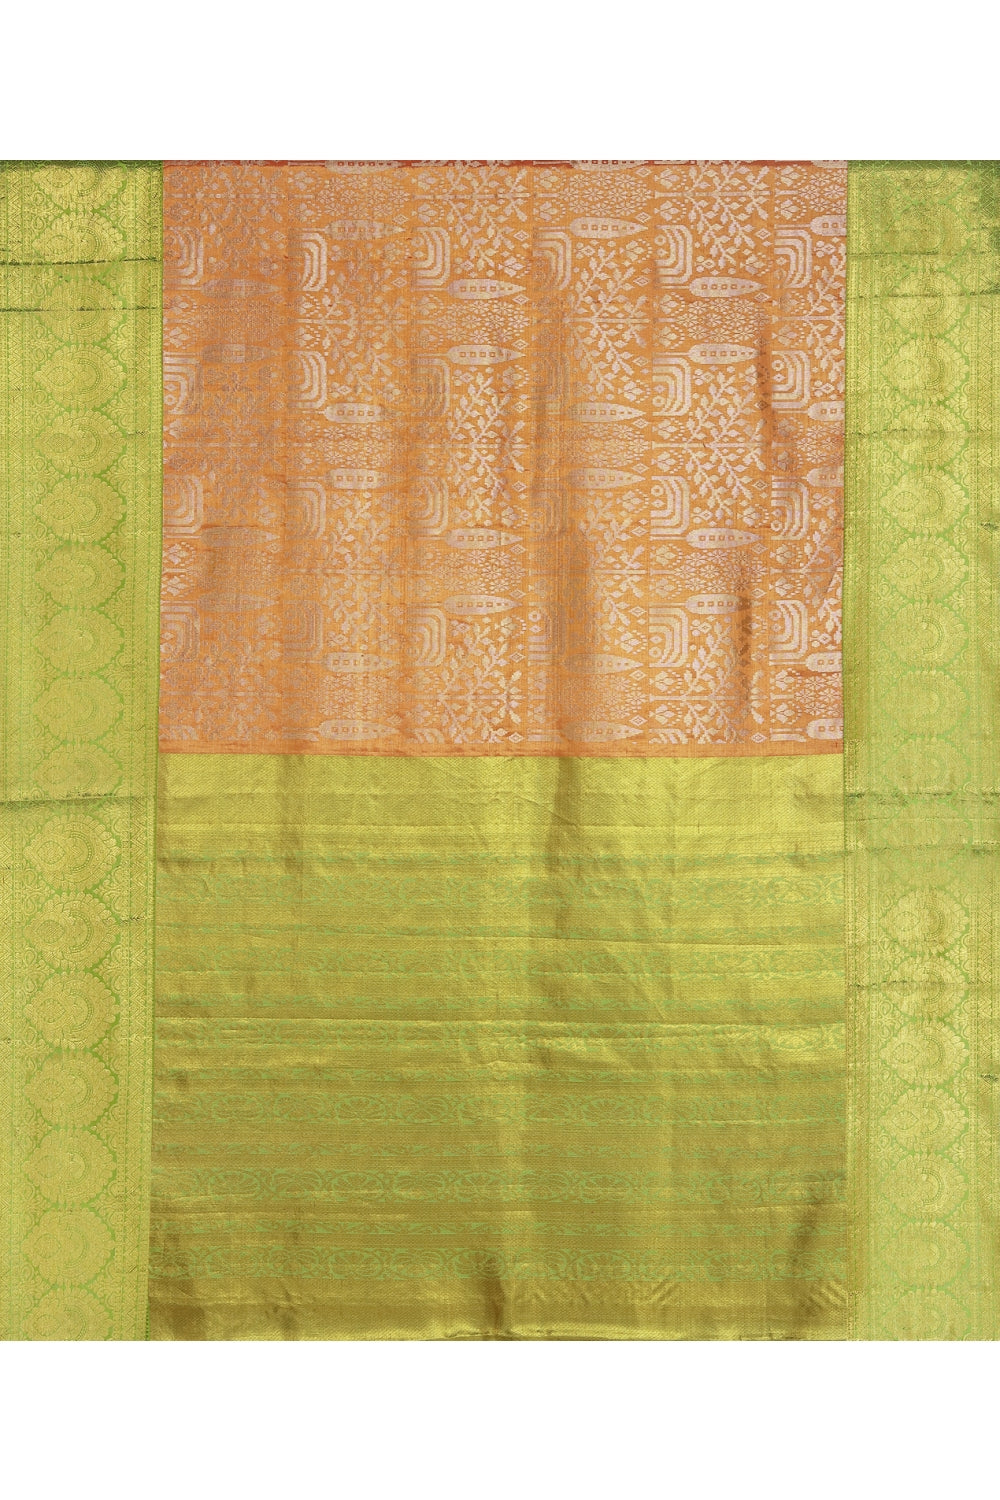 Tangerine Real Jari Golden Silk Kanjeevaram Saree Devam